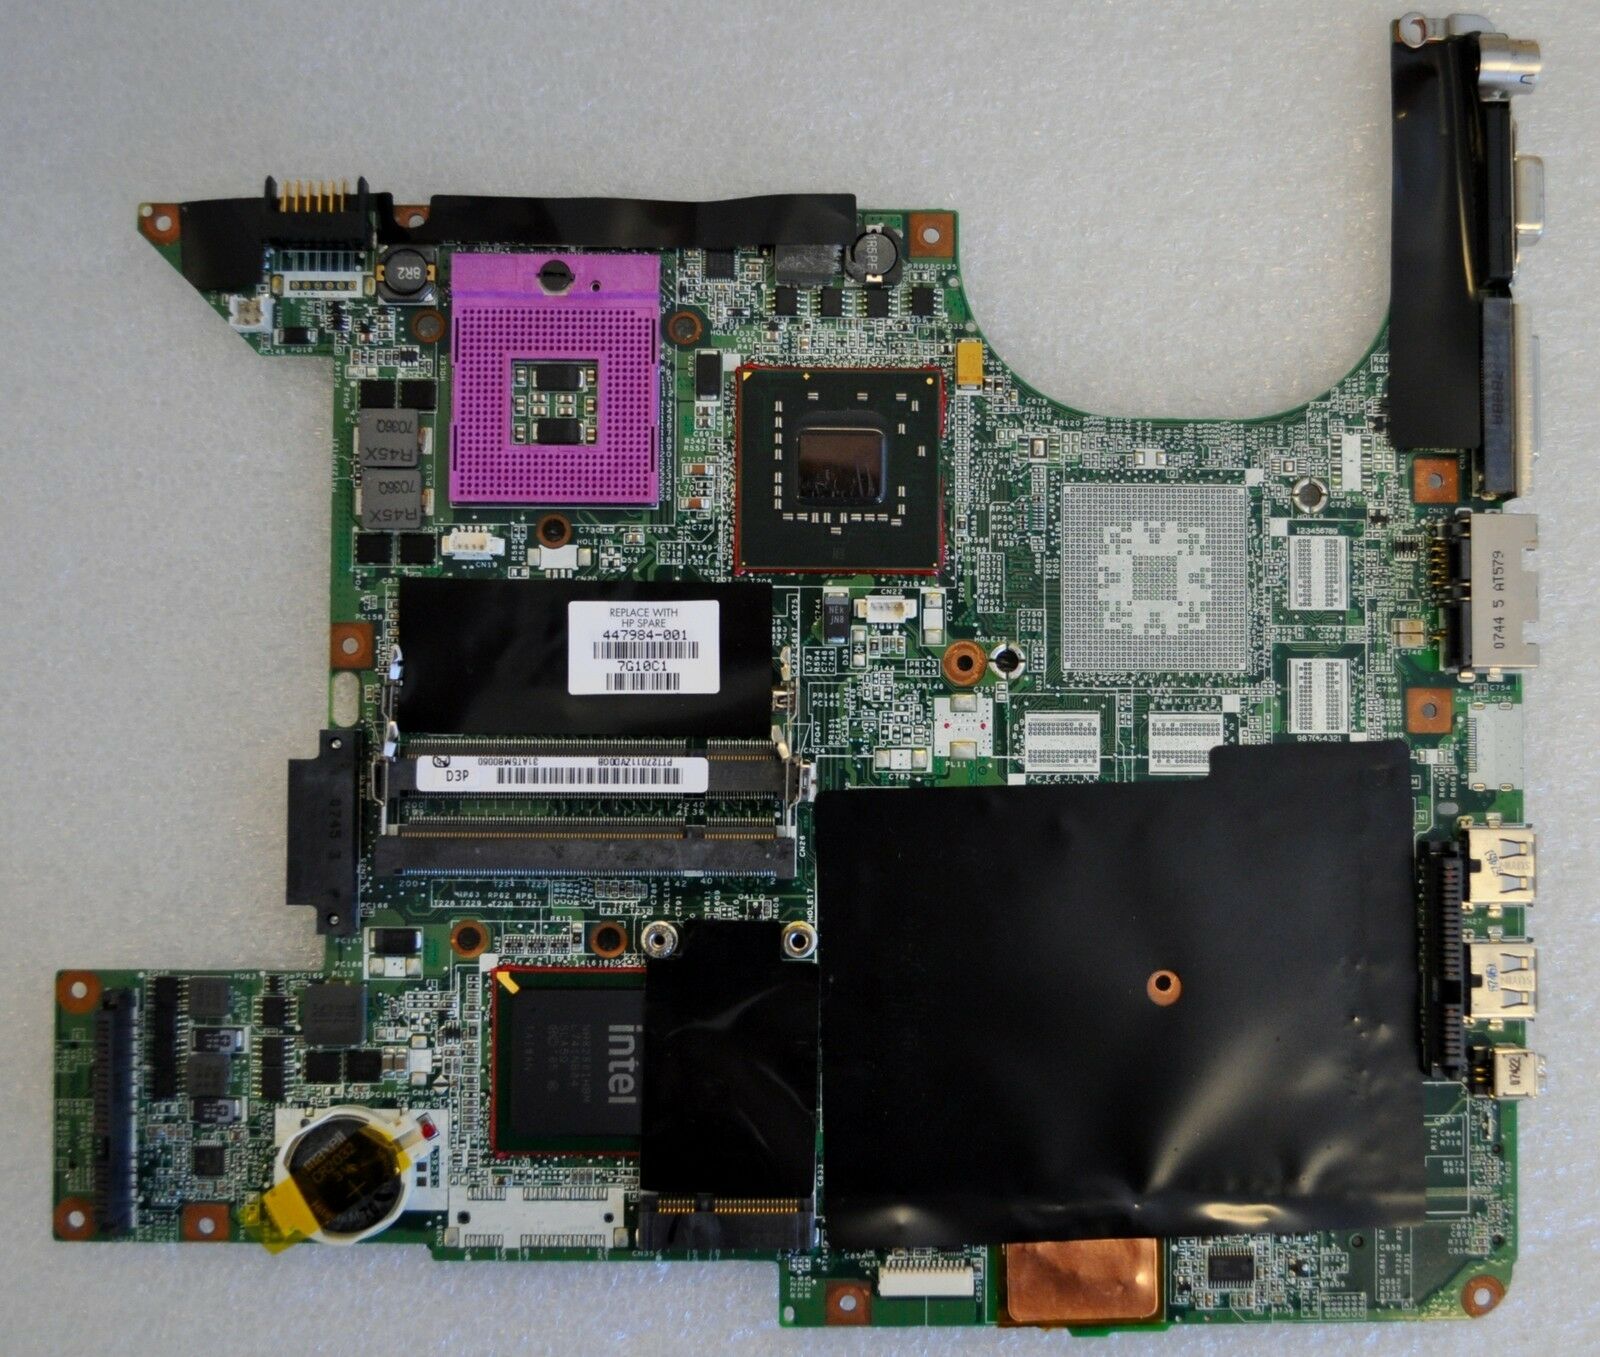 447984-001 GM965 Motherboard for HP Pavilion DV9000 DV9600 DV9700 Laptops, A Compatible CPU Brand: Intel MP